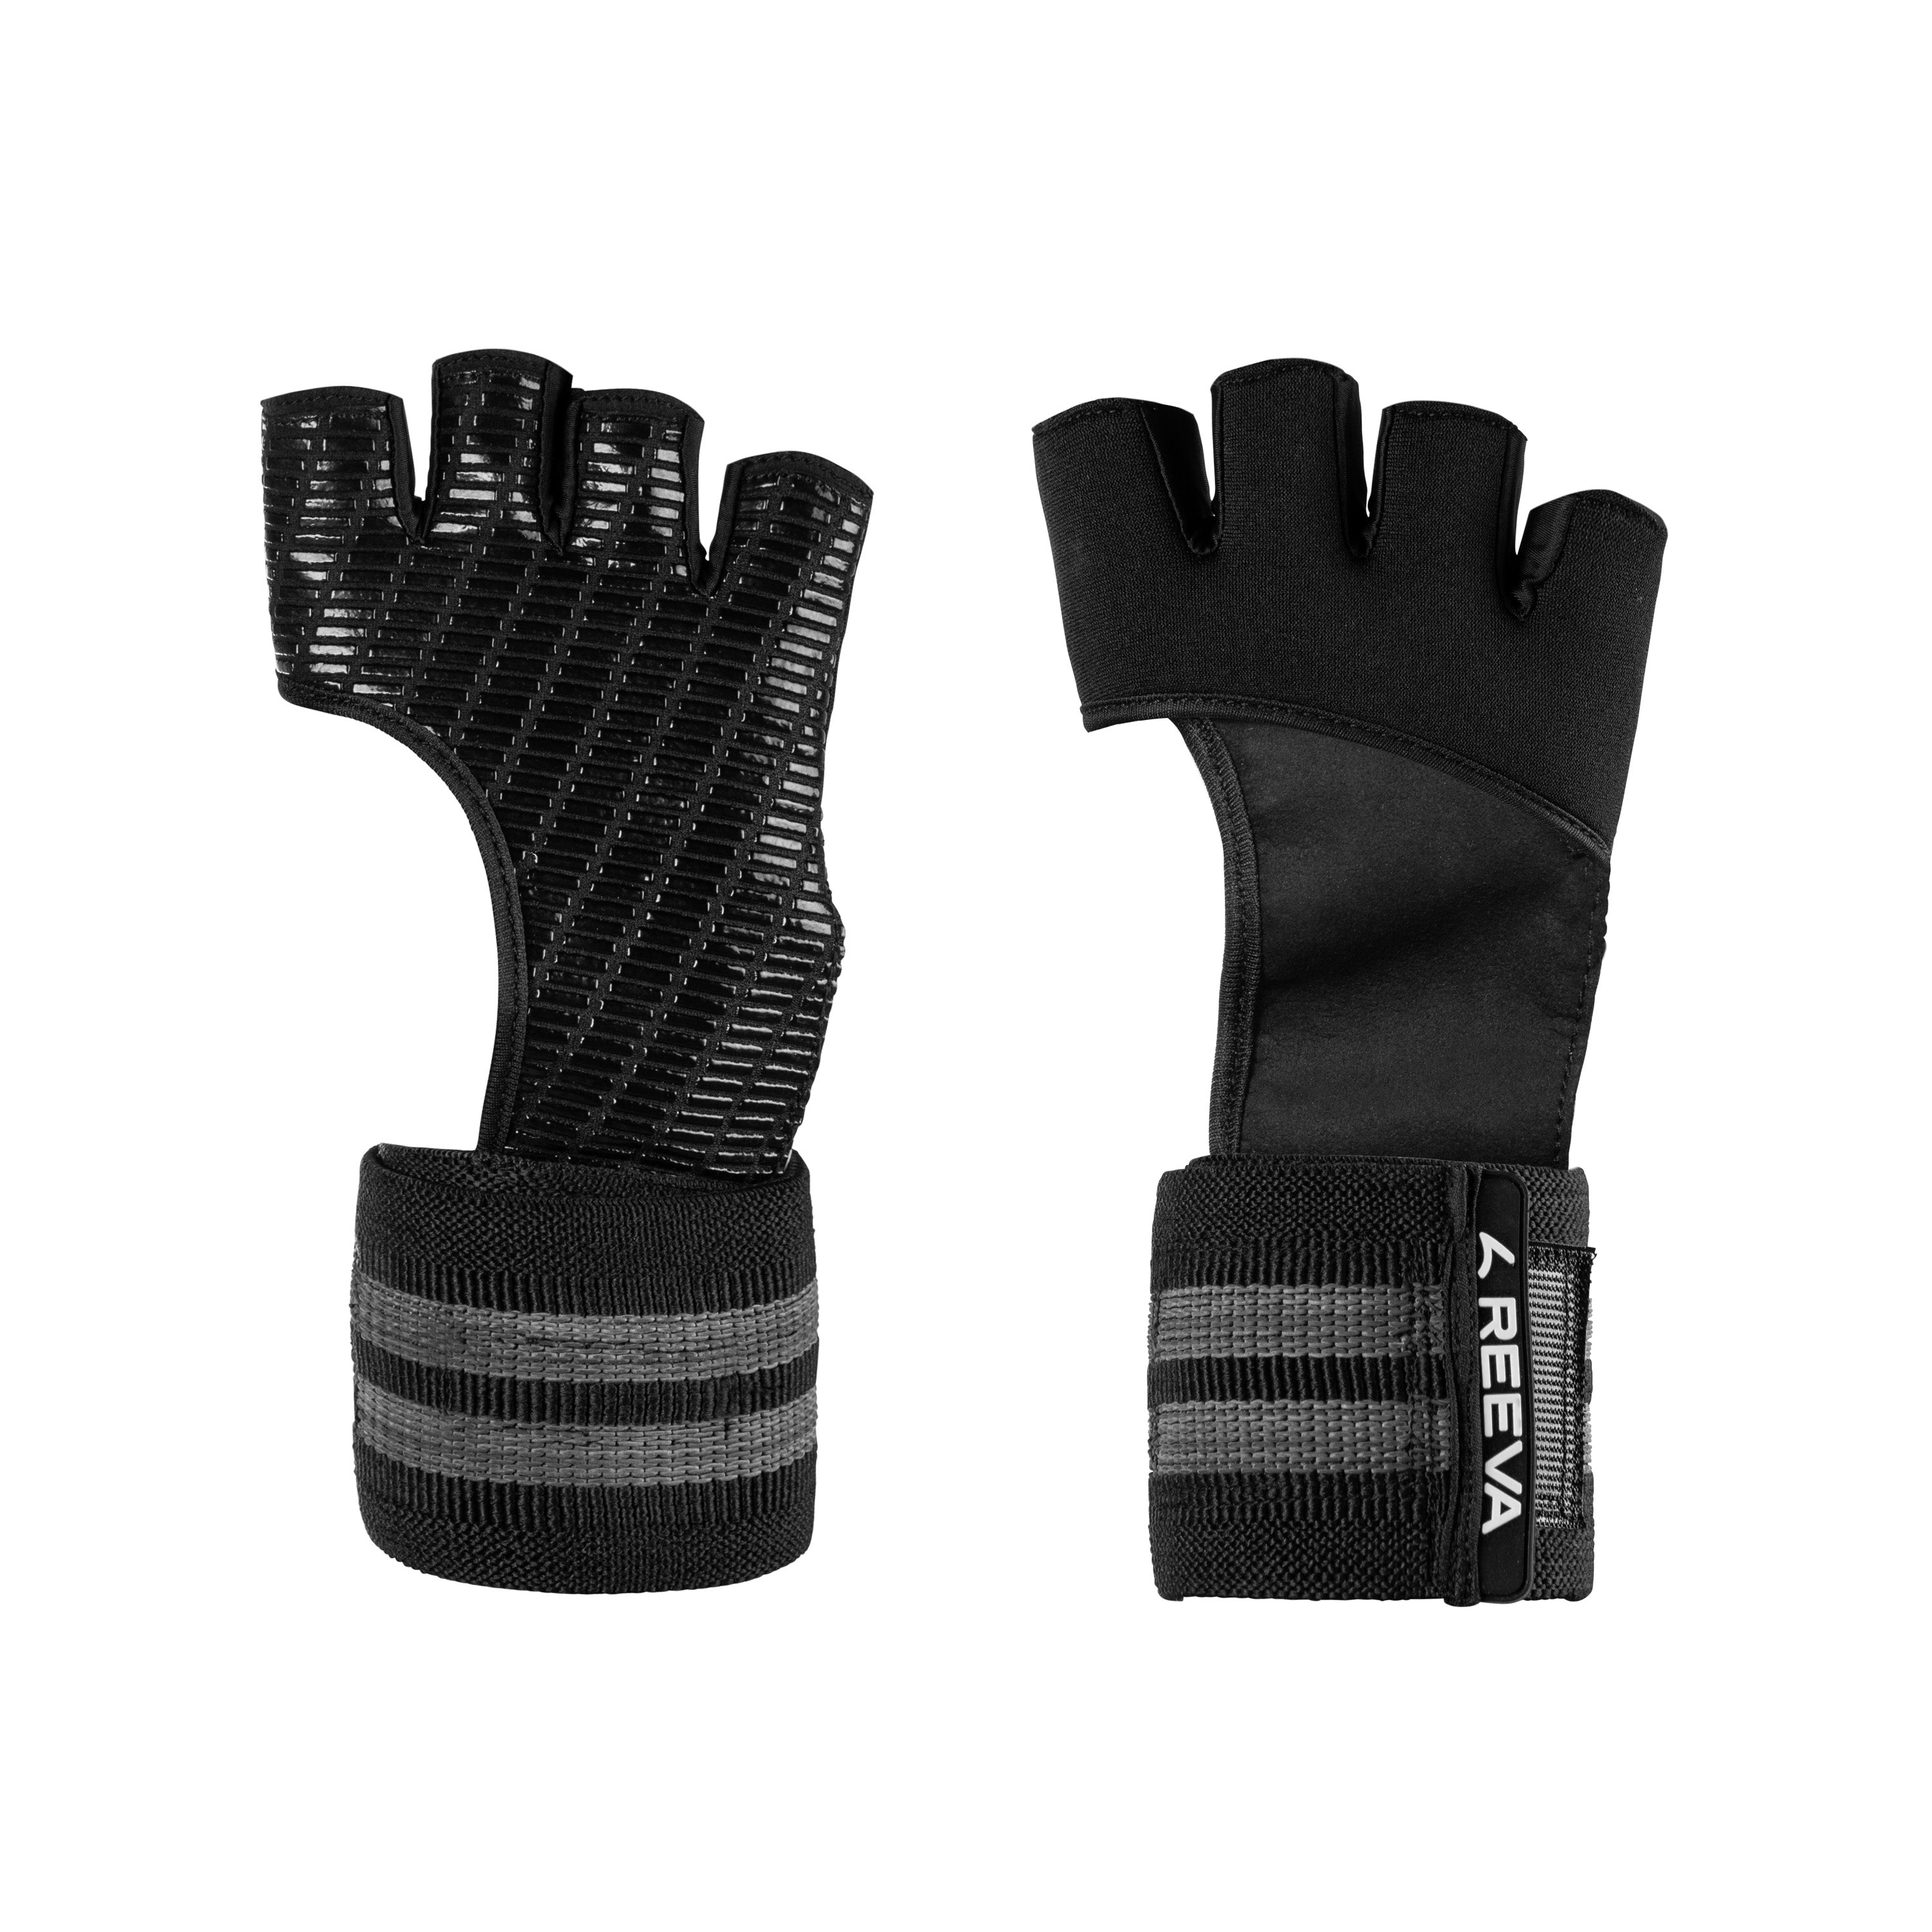 Sports gloves 3.0 Wrist Wrap